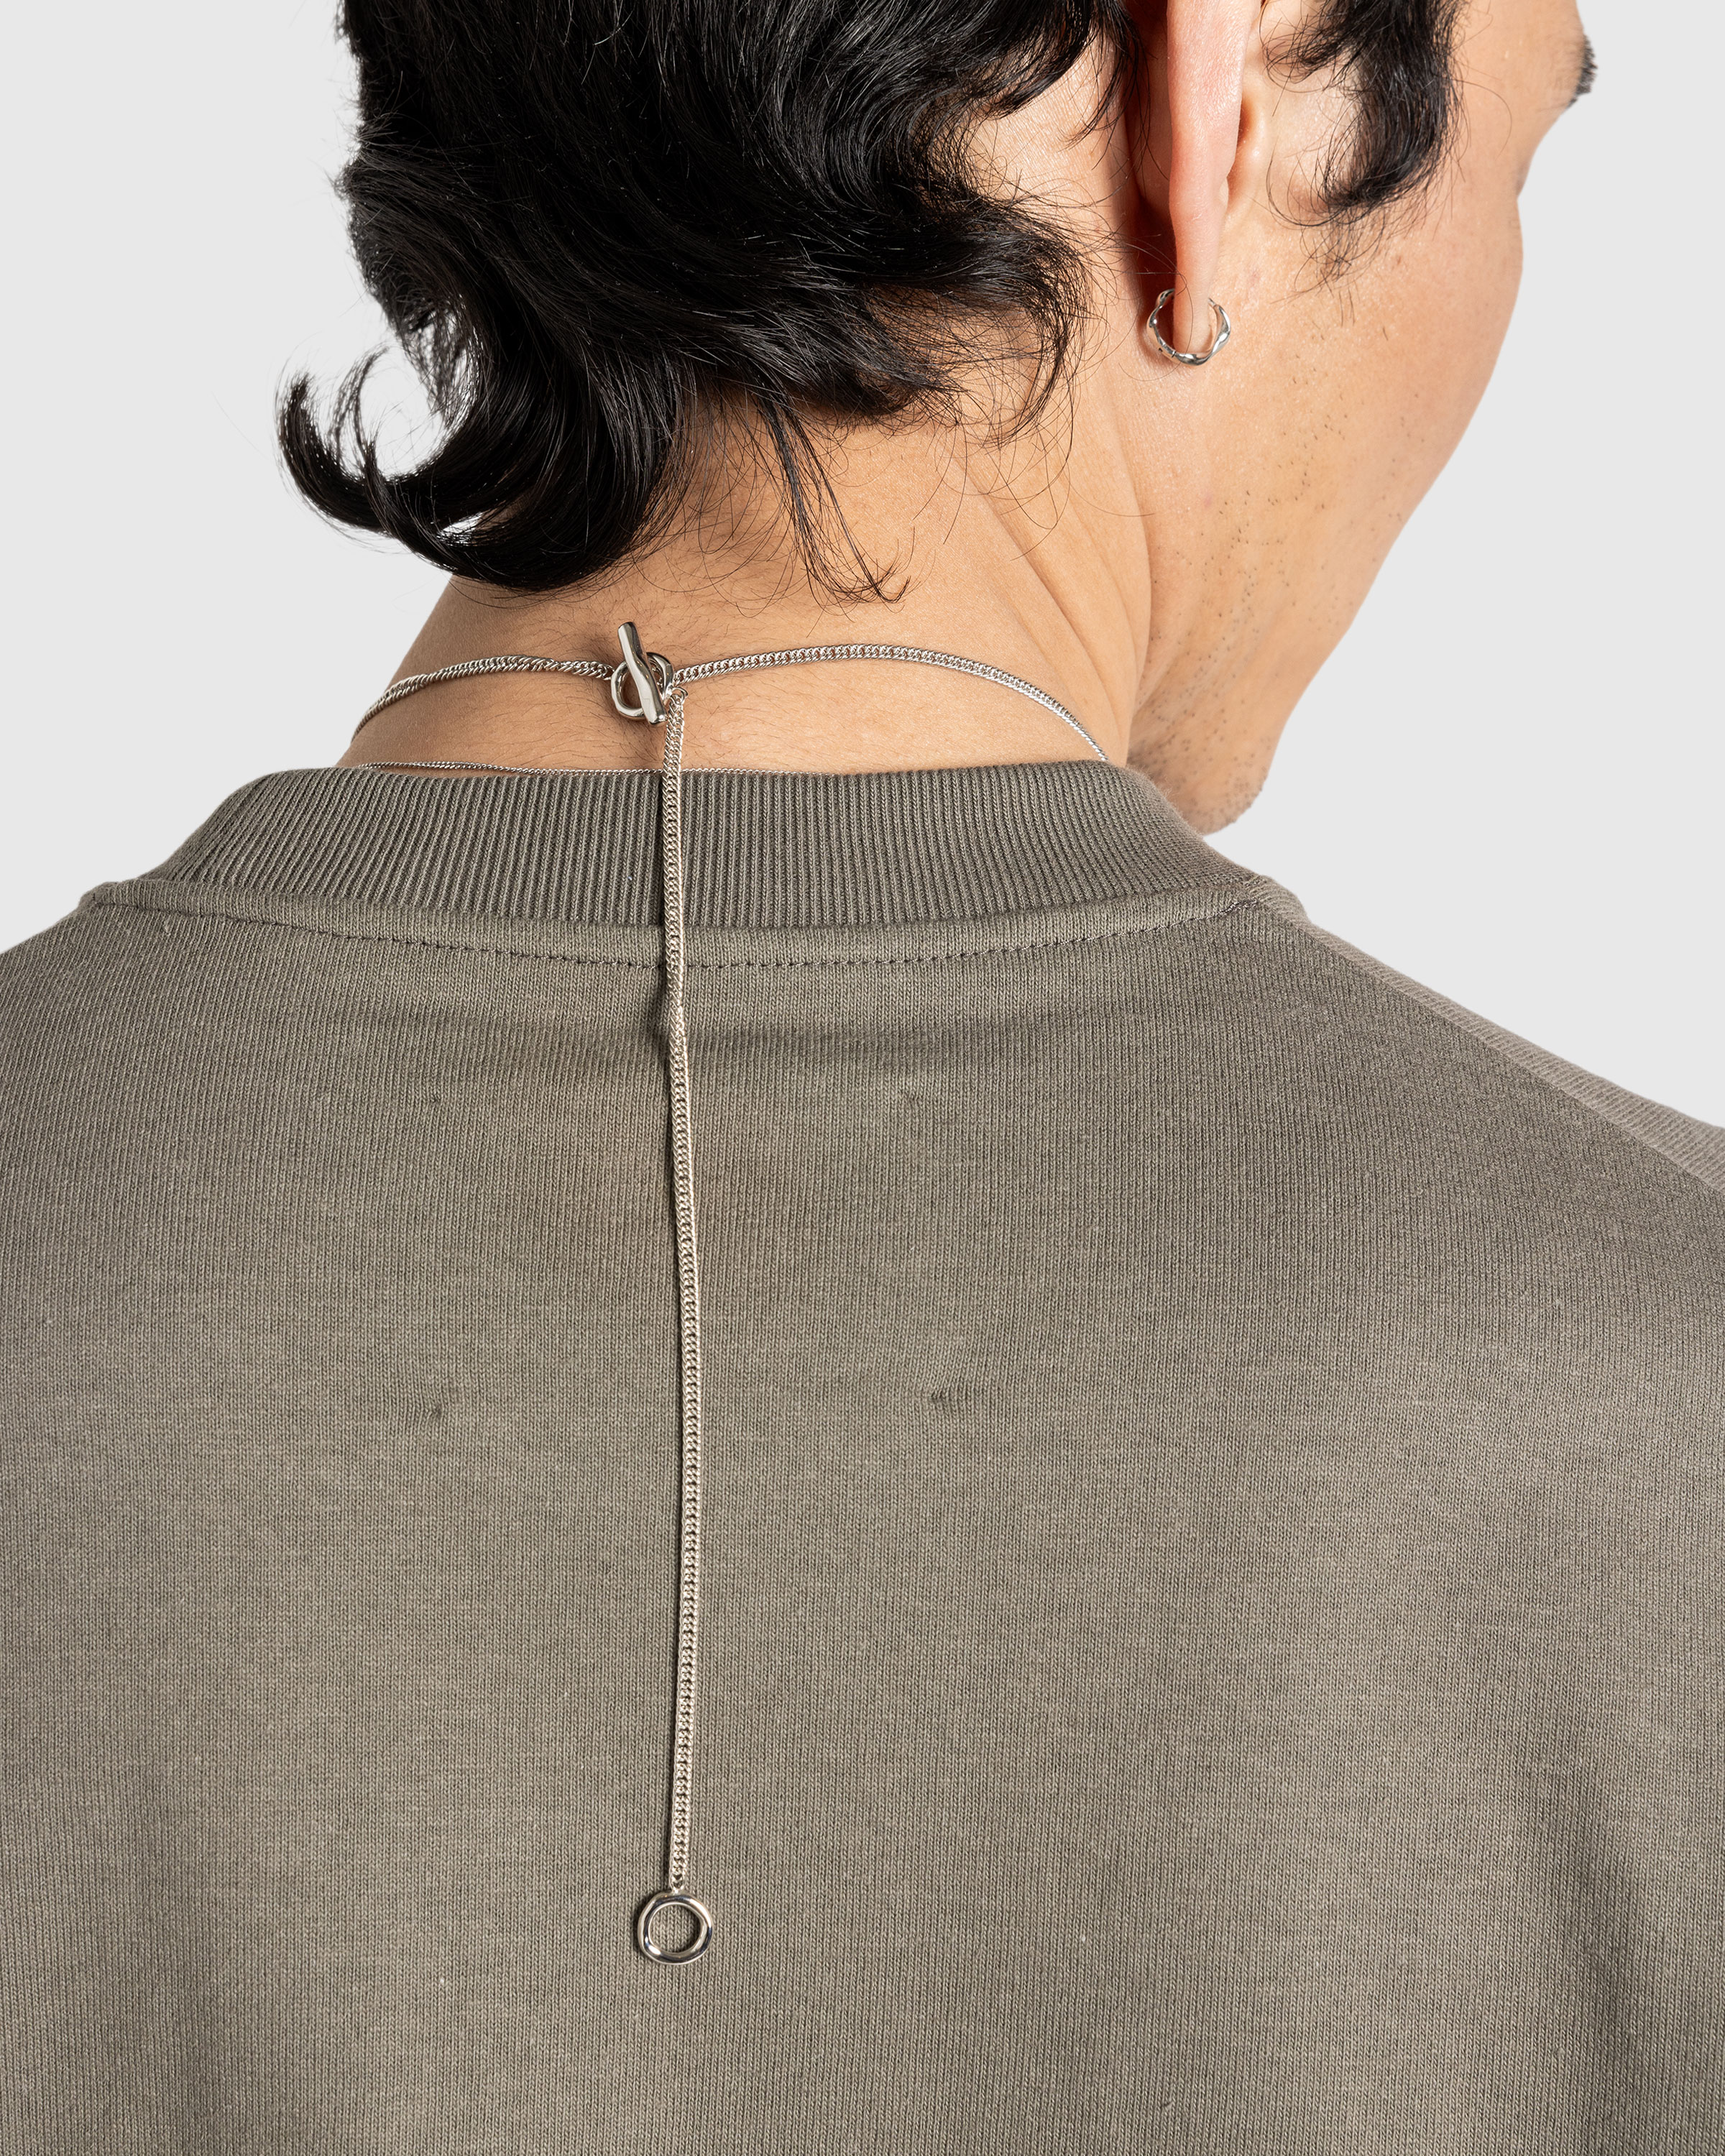 Jil Sander – BM9 Necklace 1 Gold/Silver - Earrings - Gold - Image 7